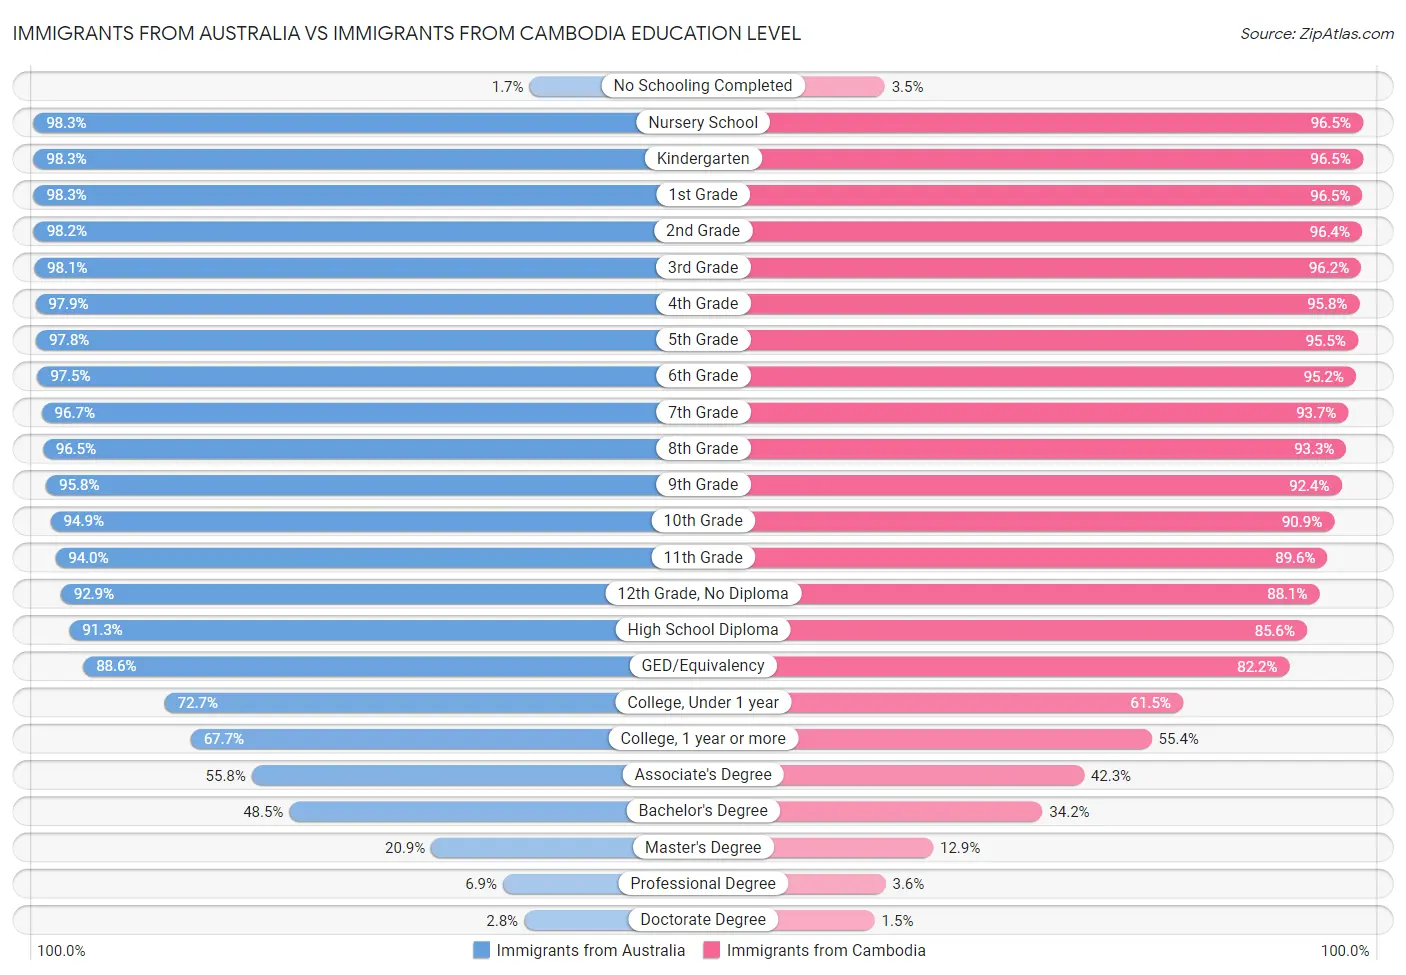 Immigrants from Australia vs Immigrants from Cambodia Education Level